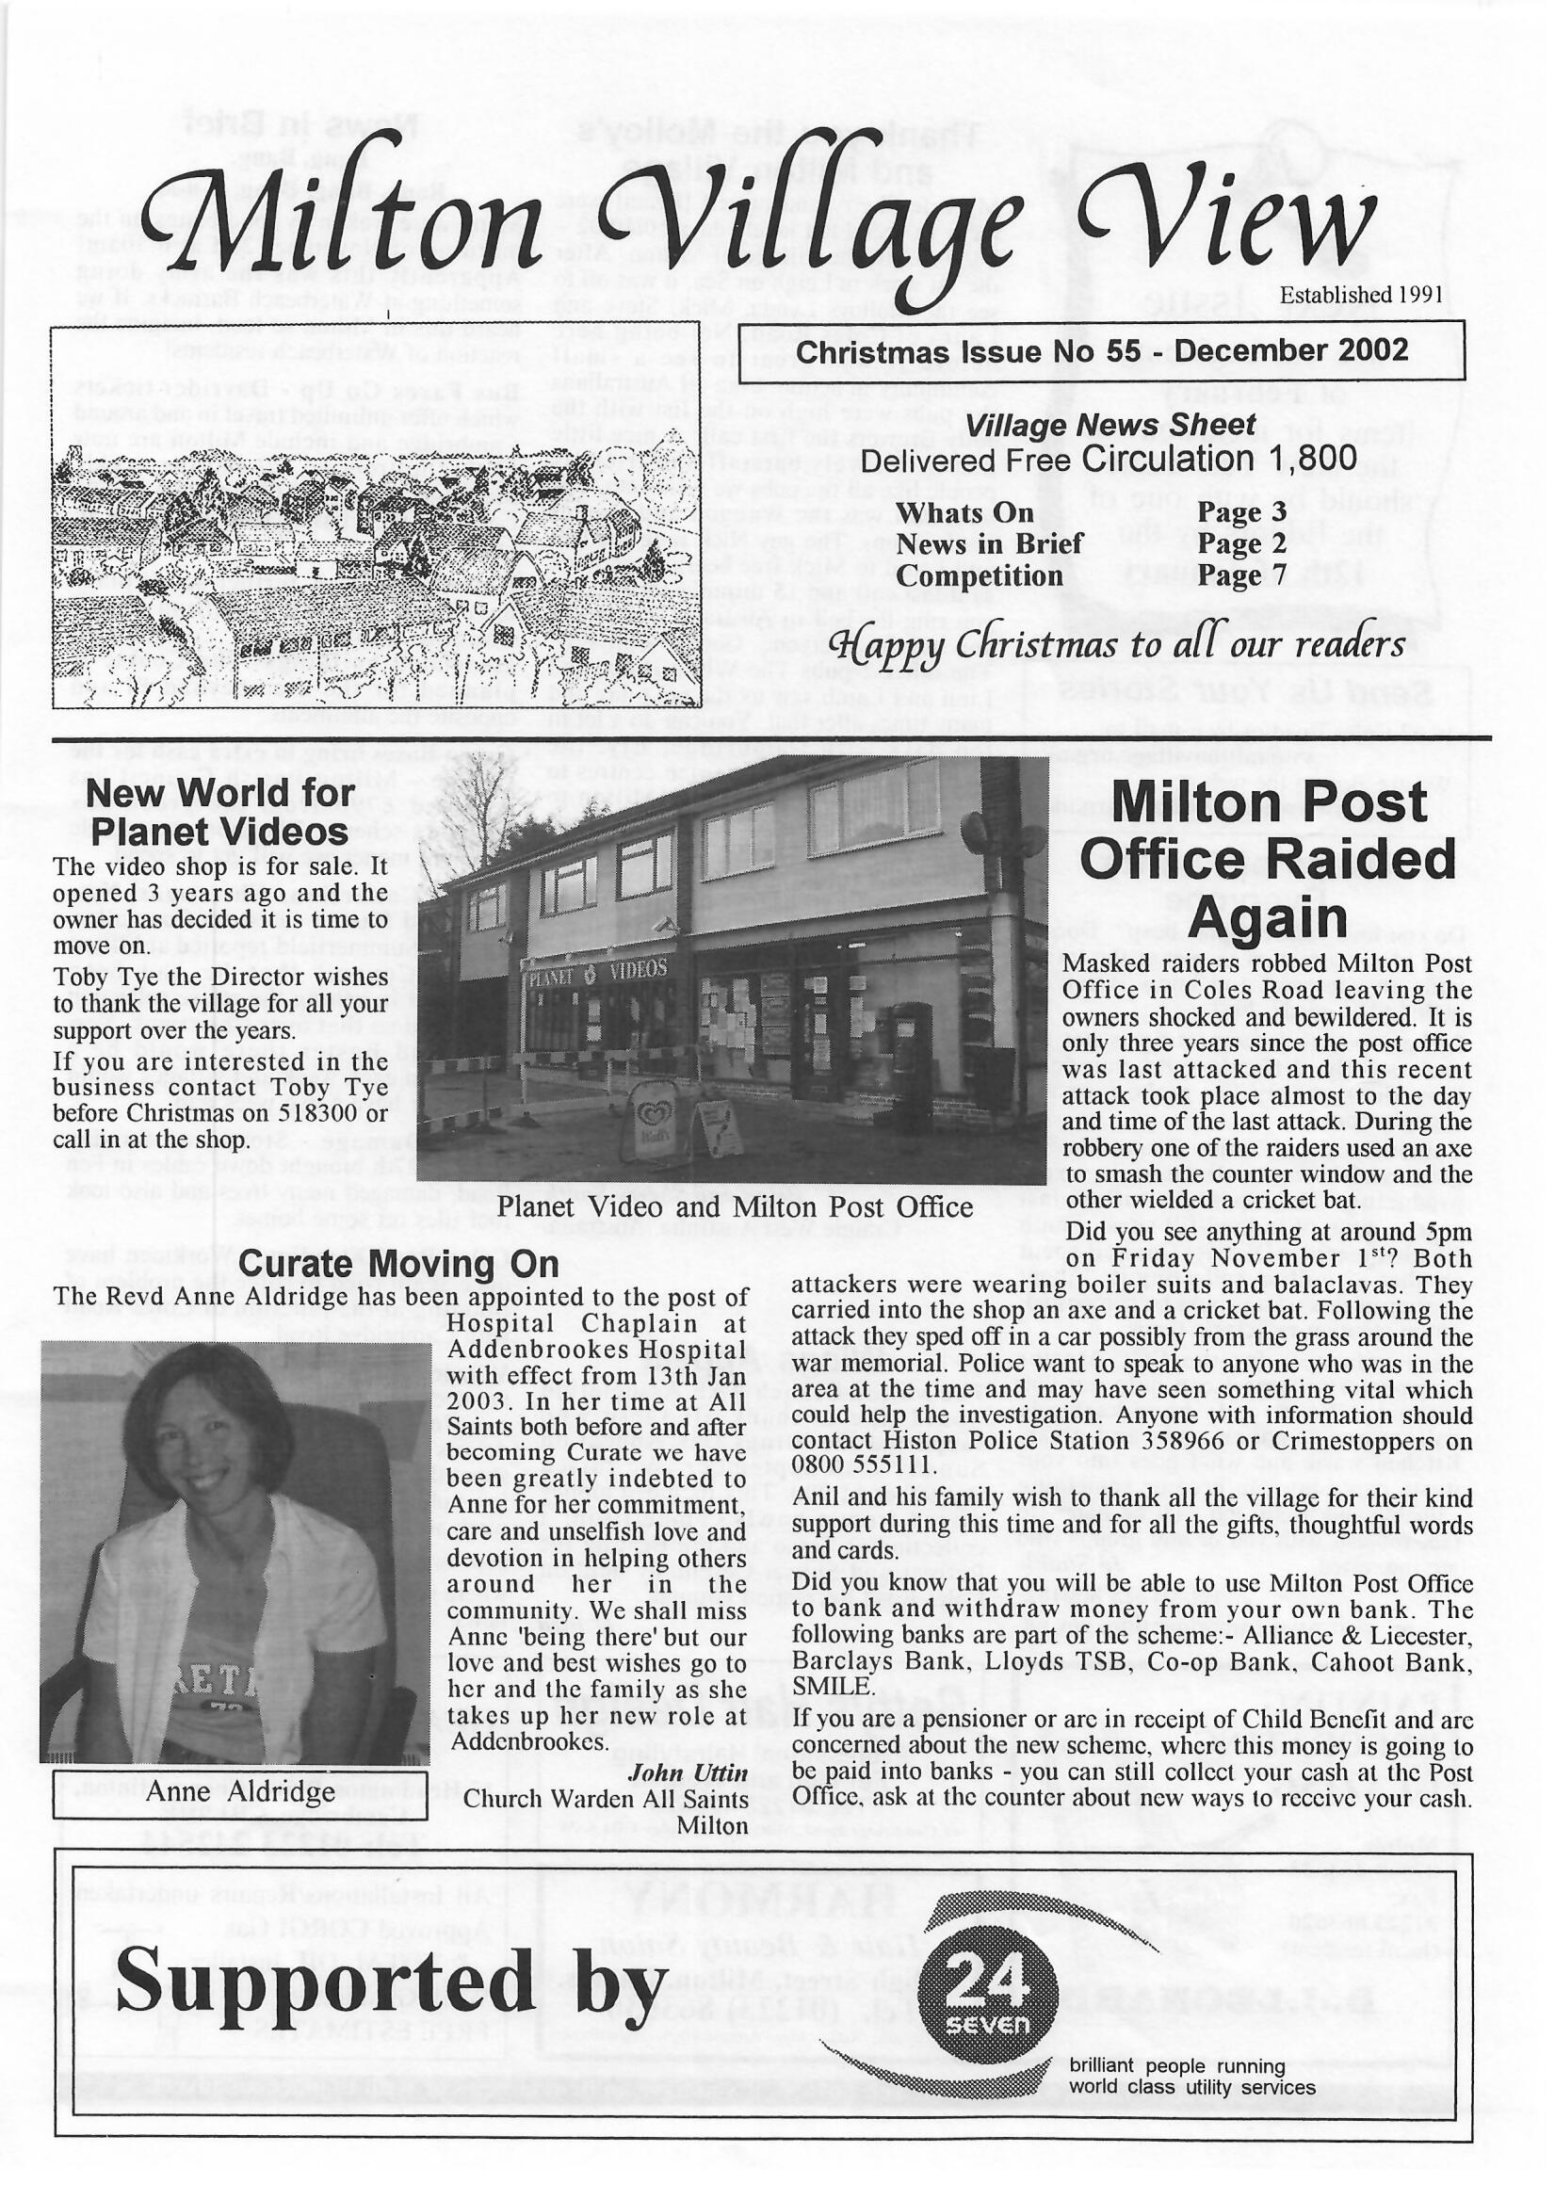 VV Issue 55 Dec 2002